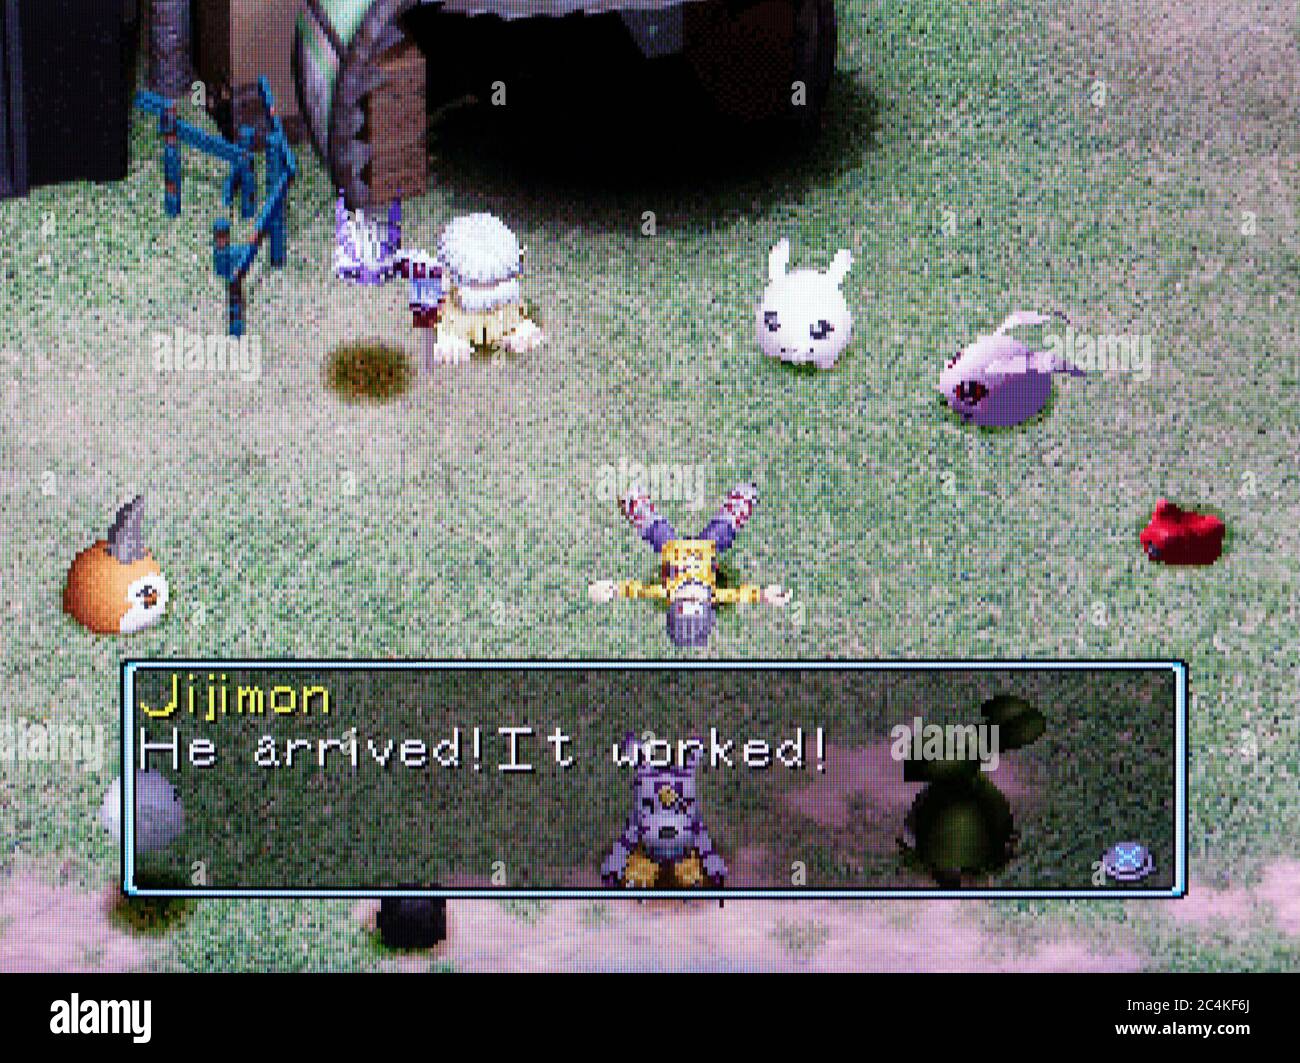 Digimon World - Sony PlayStation 1 PS1 PSX - solo para uso editorial Foto de stock